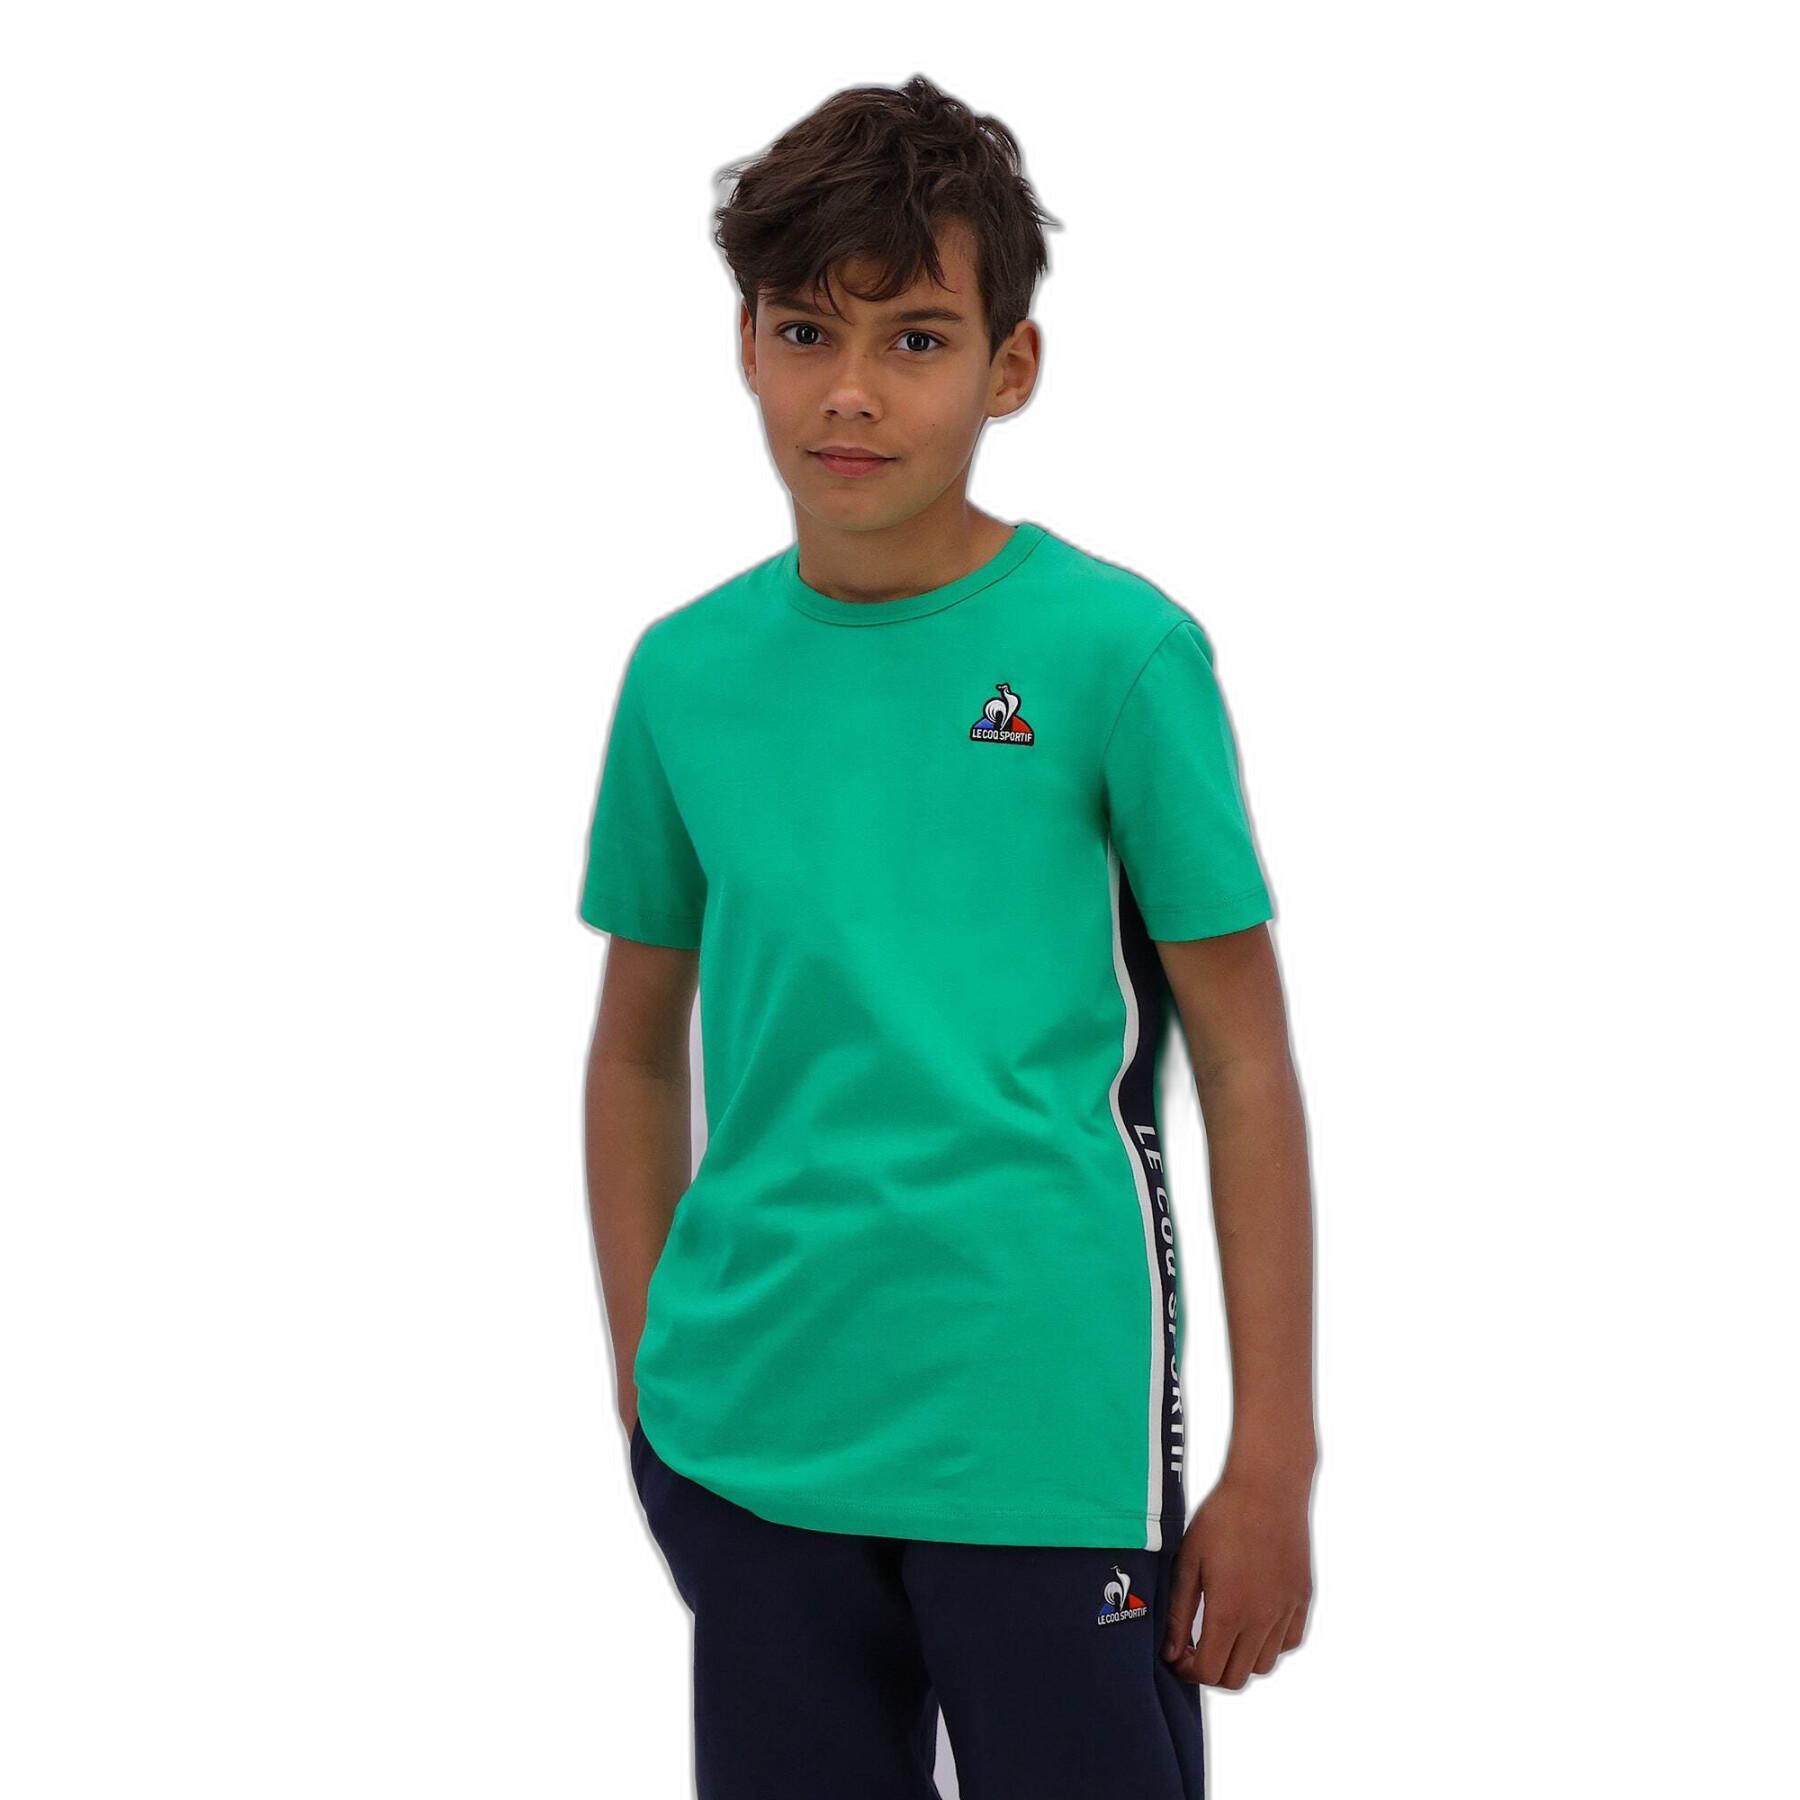 Camiseta para niños Le Coq Sportif Bat N°1